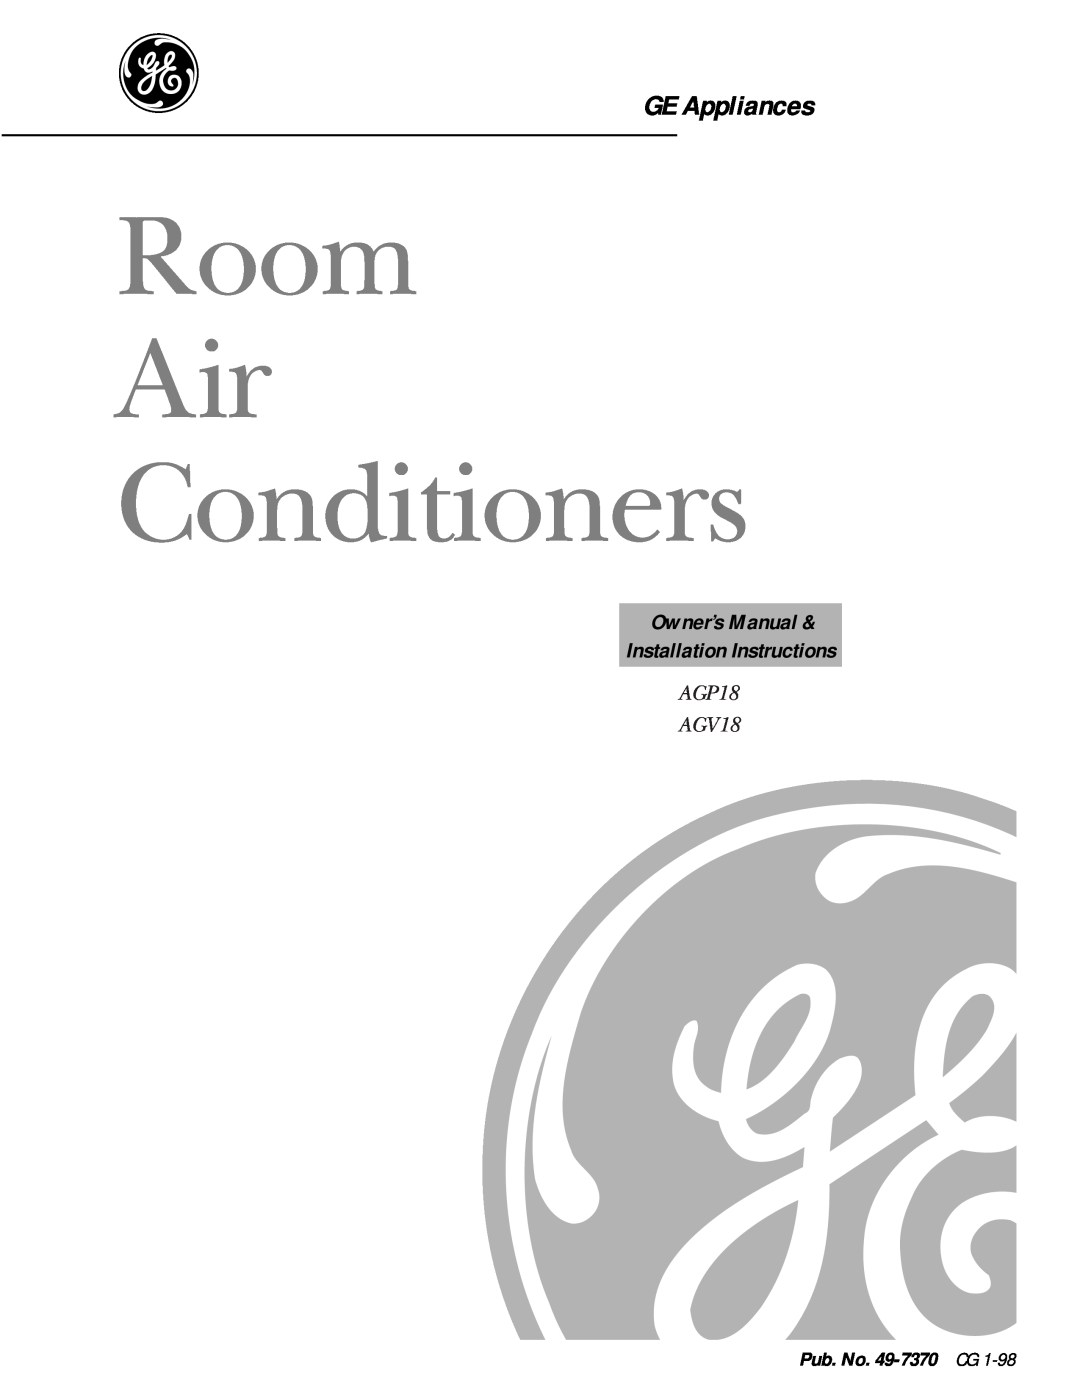 GE agp18, agv18 owner manual Pub. No. 49-7370 CG, Room Air Conditioners, GE Appliances, AGP18 AGV18 